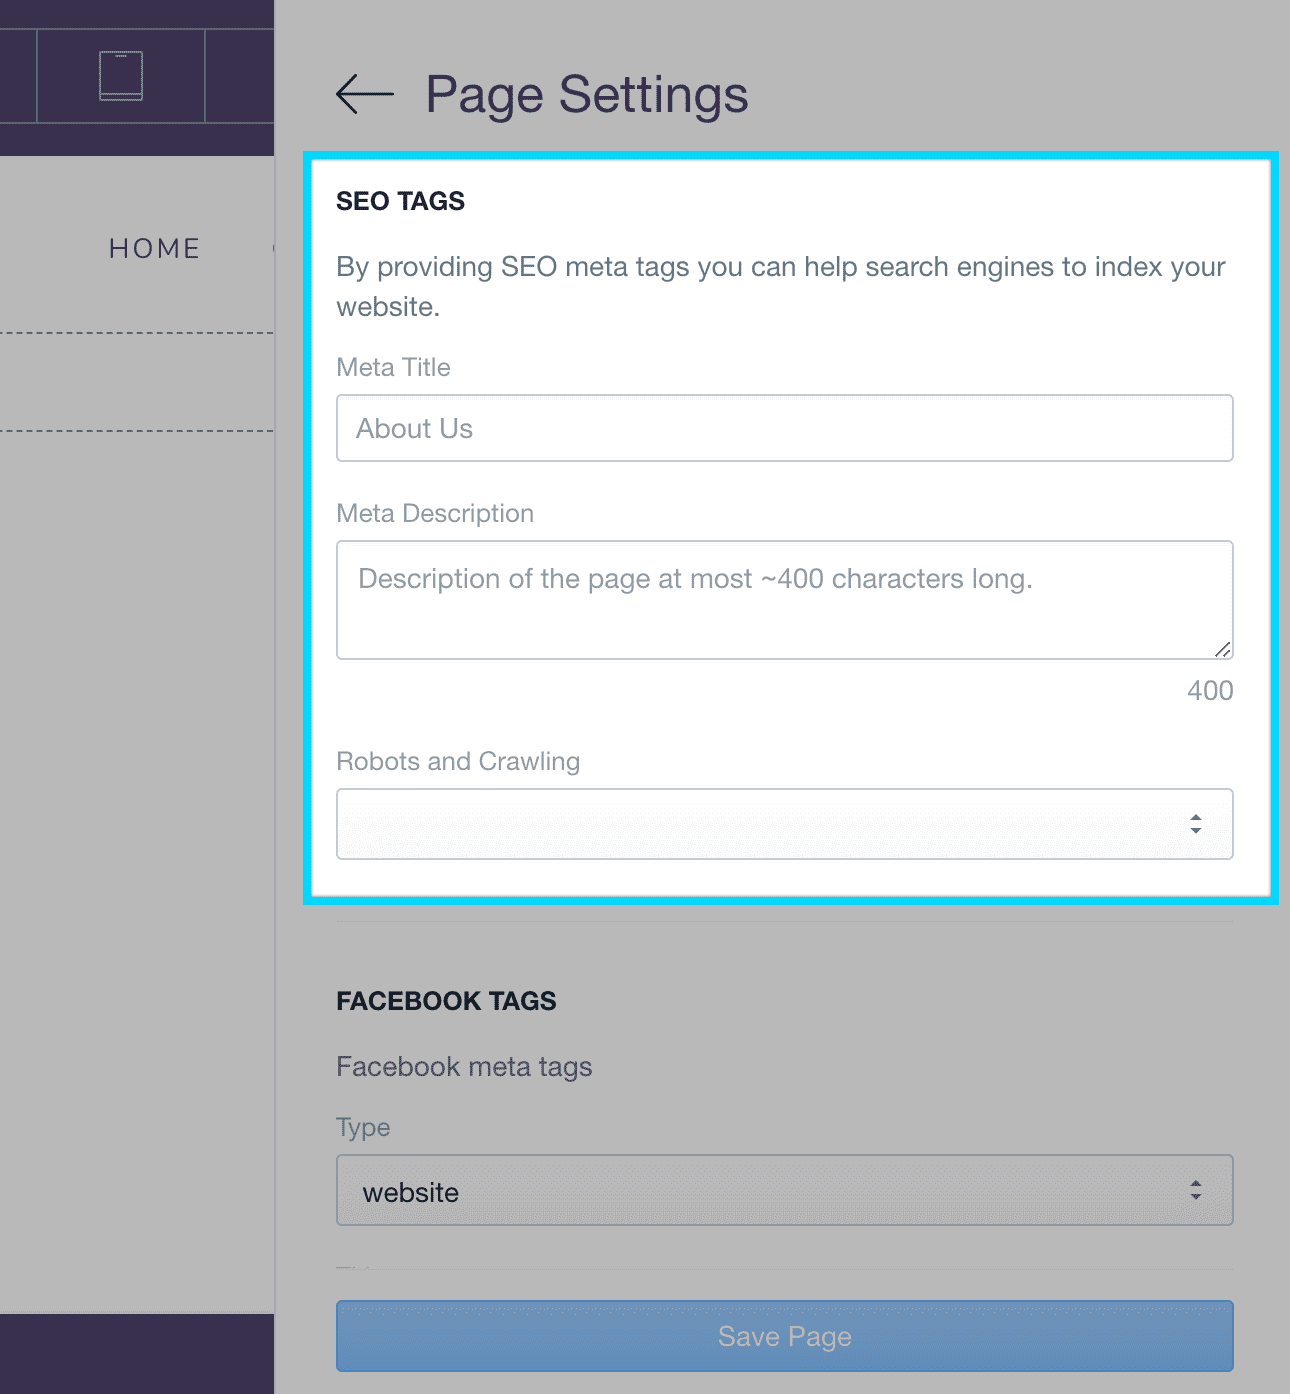 shogun page settings seo settings